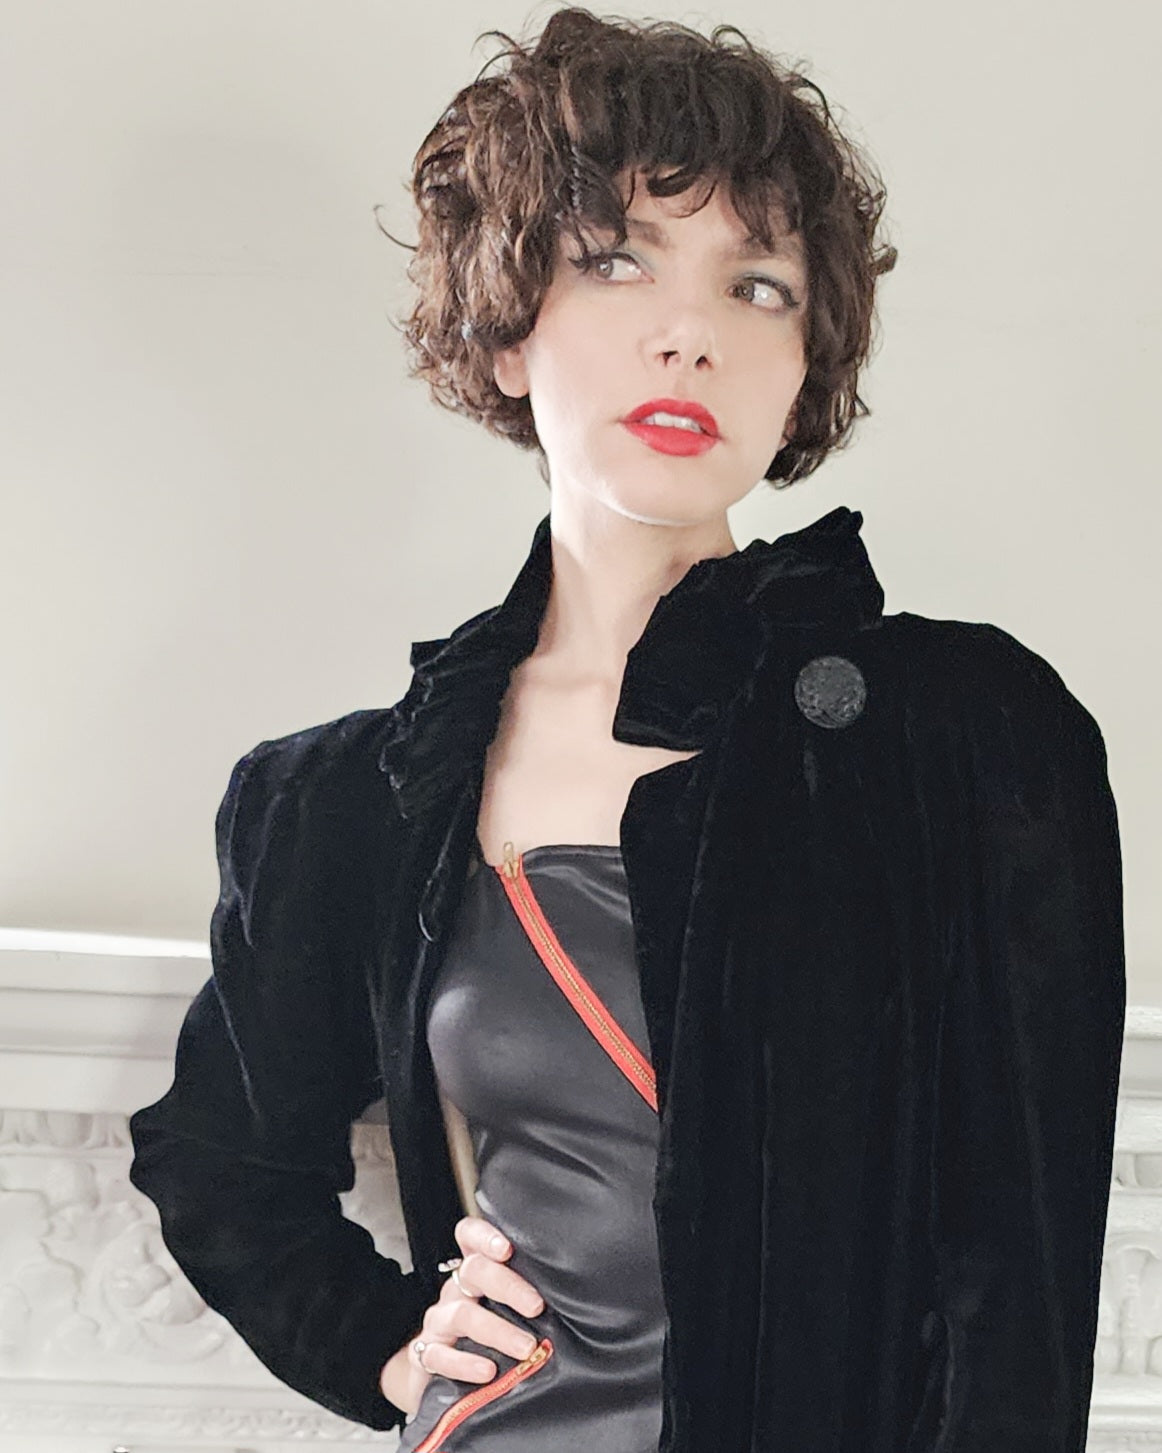 1930s Black Velvet Opera Coat Maxi Length Ruffled Collar / 30s Evening Wm Taylor & Sons M to L / Duteille